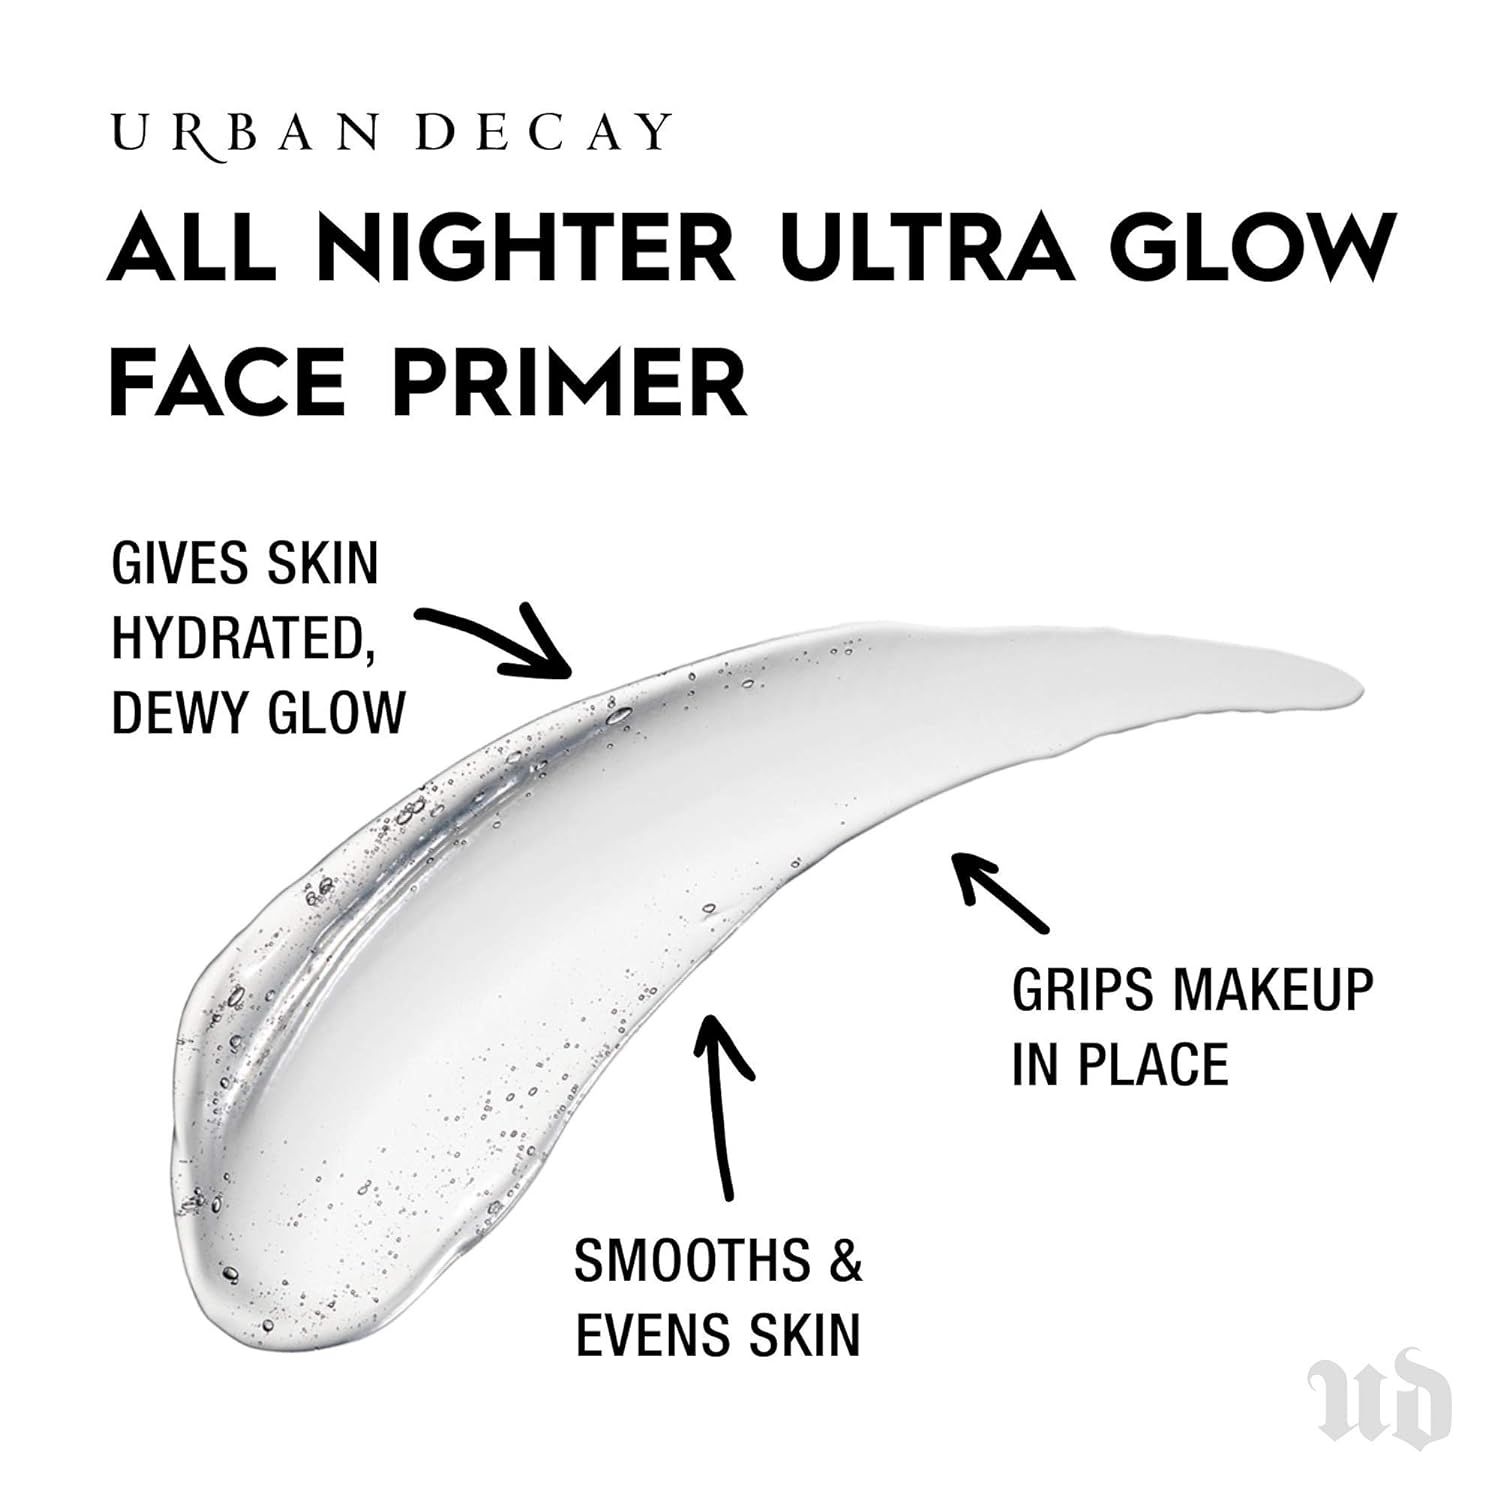  Urban Decay All Nighter Ultra Glow Face Primer - Lightweight, Long-Lasting Formula - Locks Foundation in Place, Smooths & Hydrates Skin - 1.0 fl oz